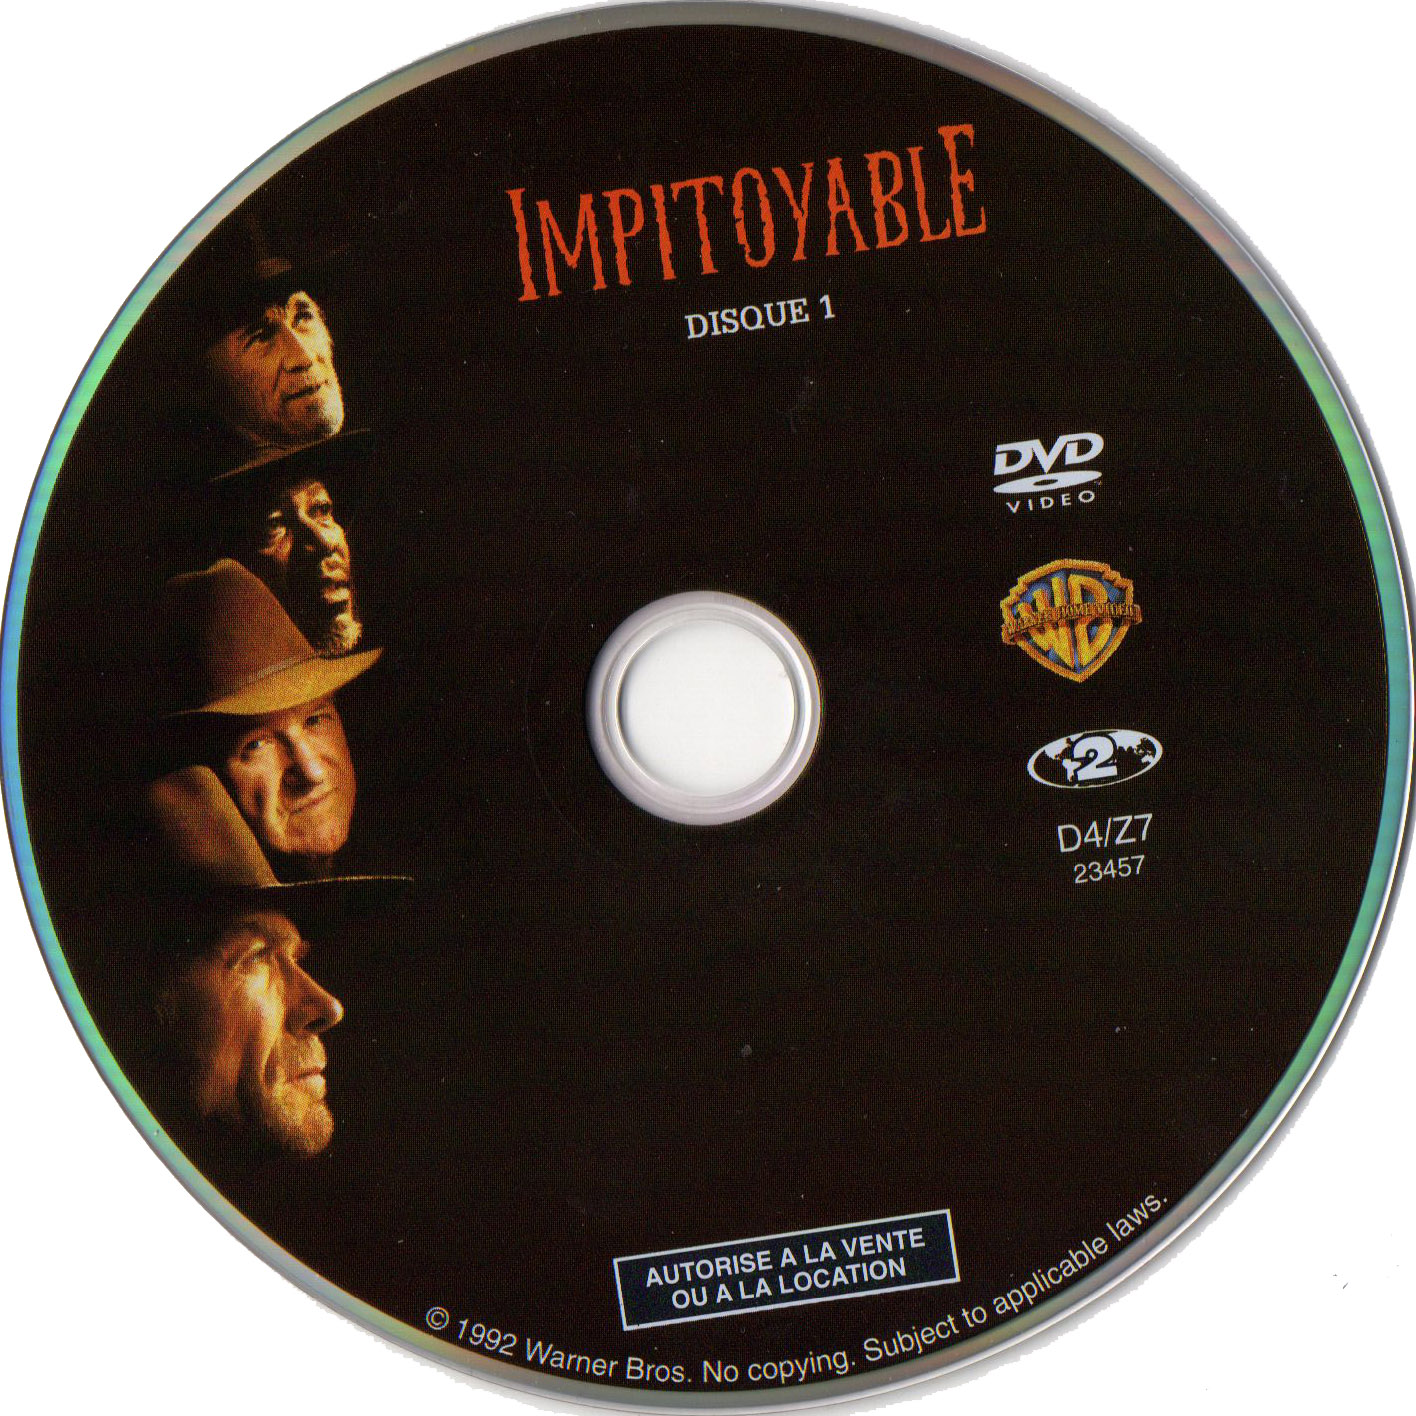 Impitoyable DISC 1